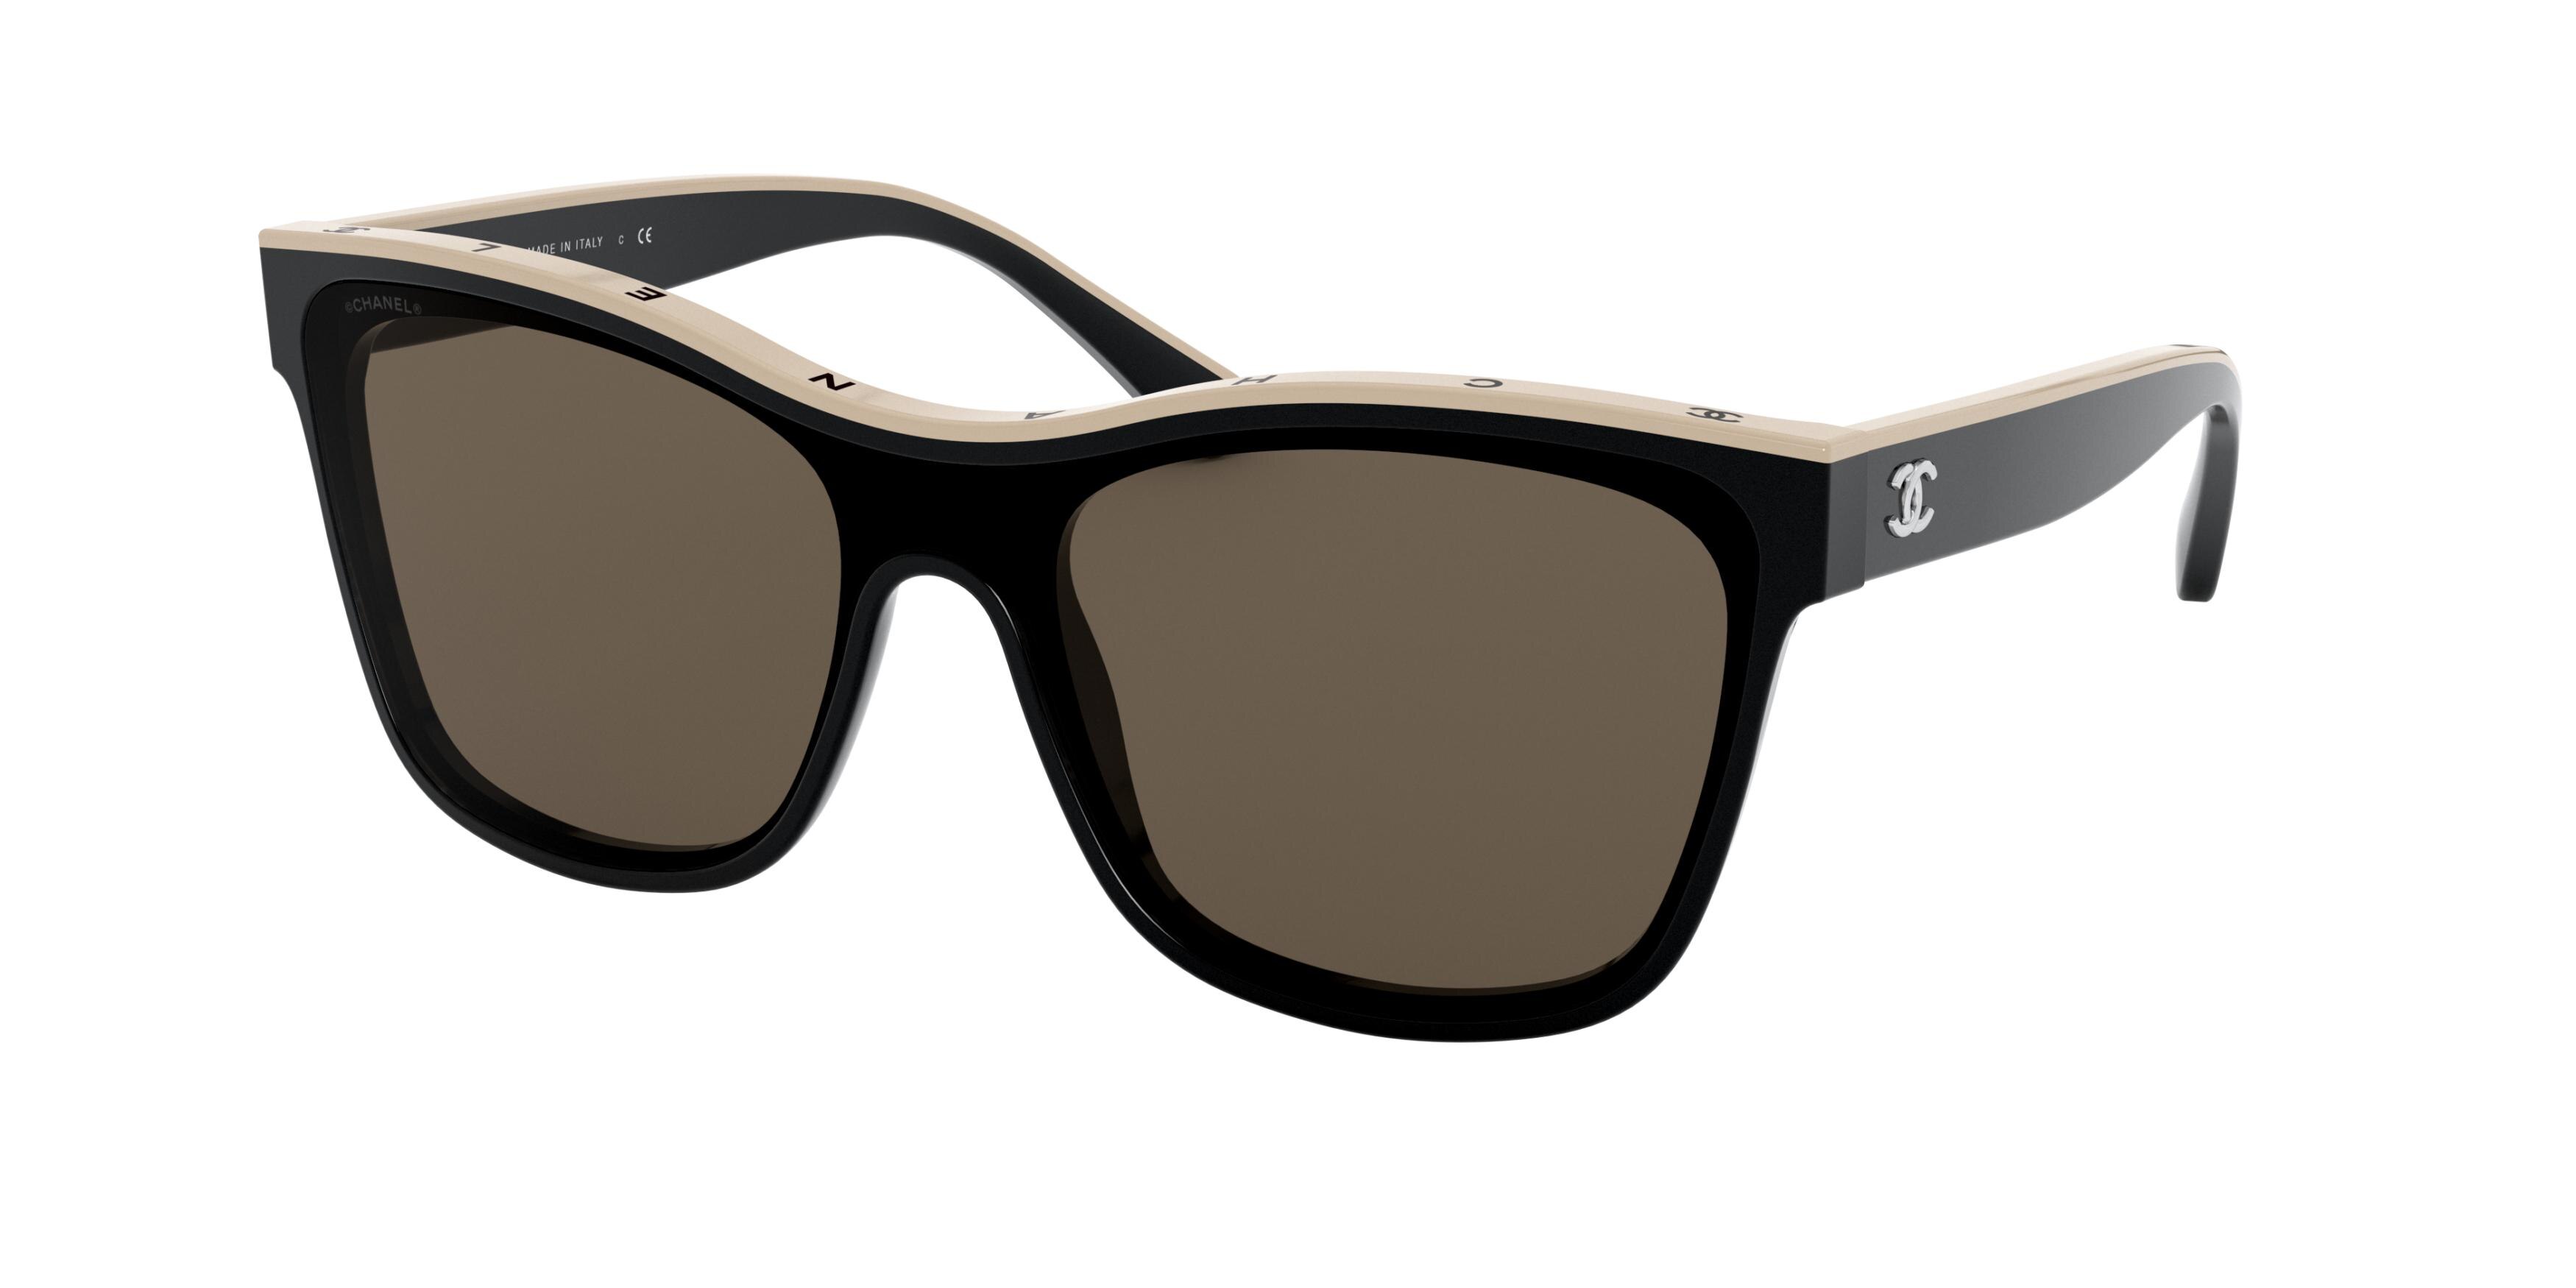 Chanel Sunglasses - Affordable Designer Sunglasses